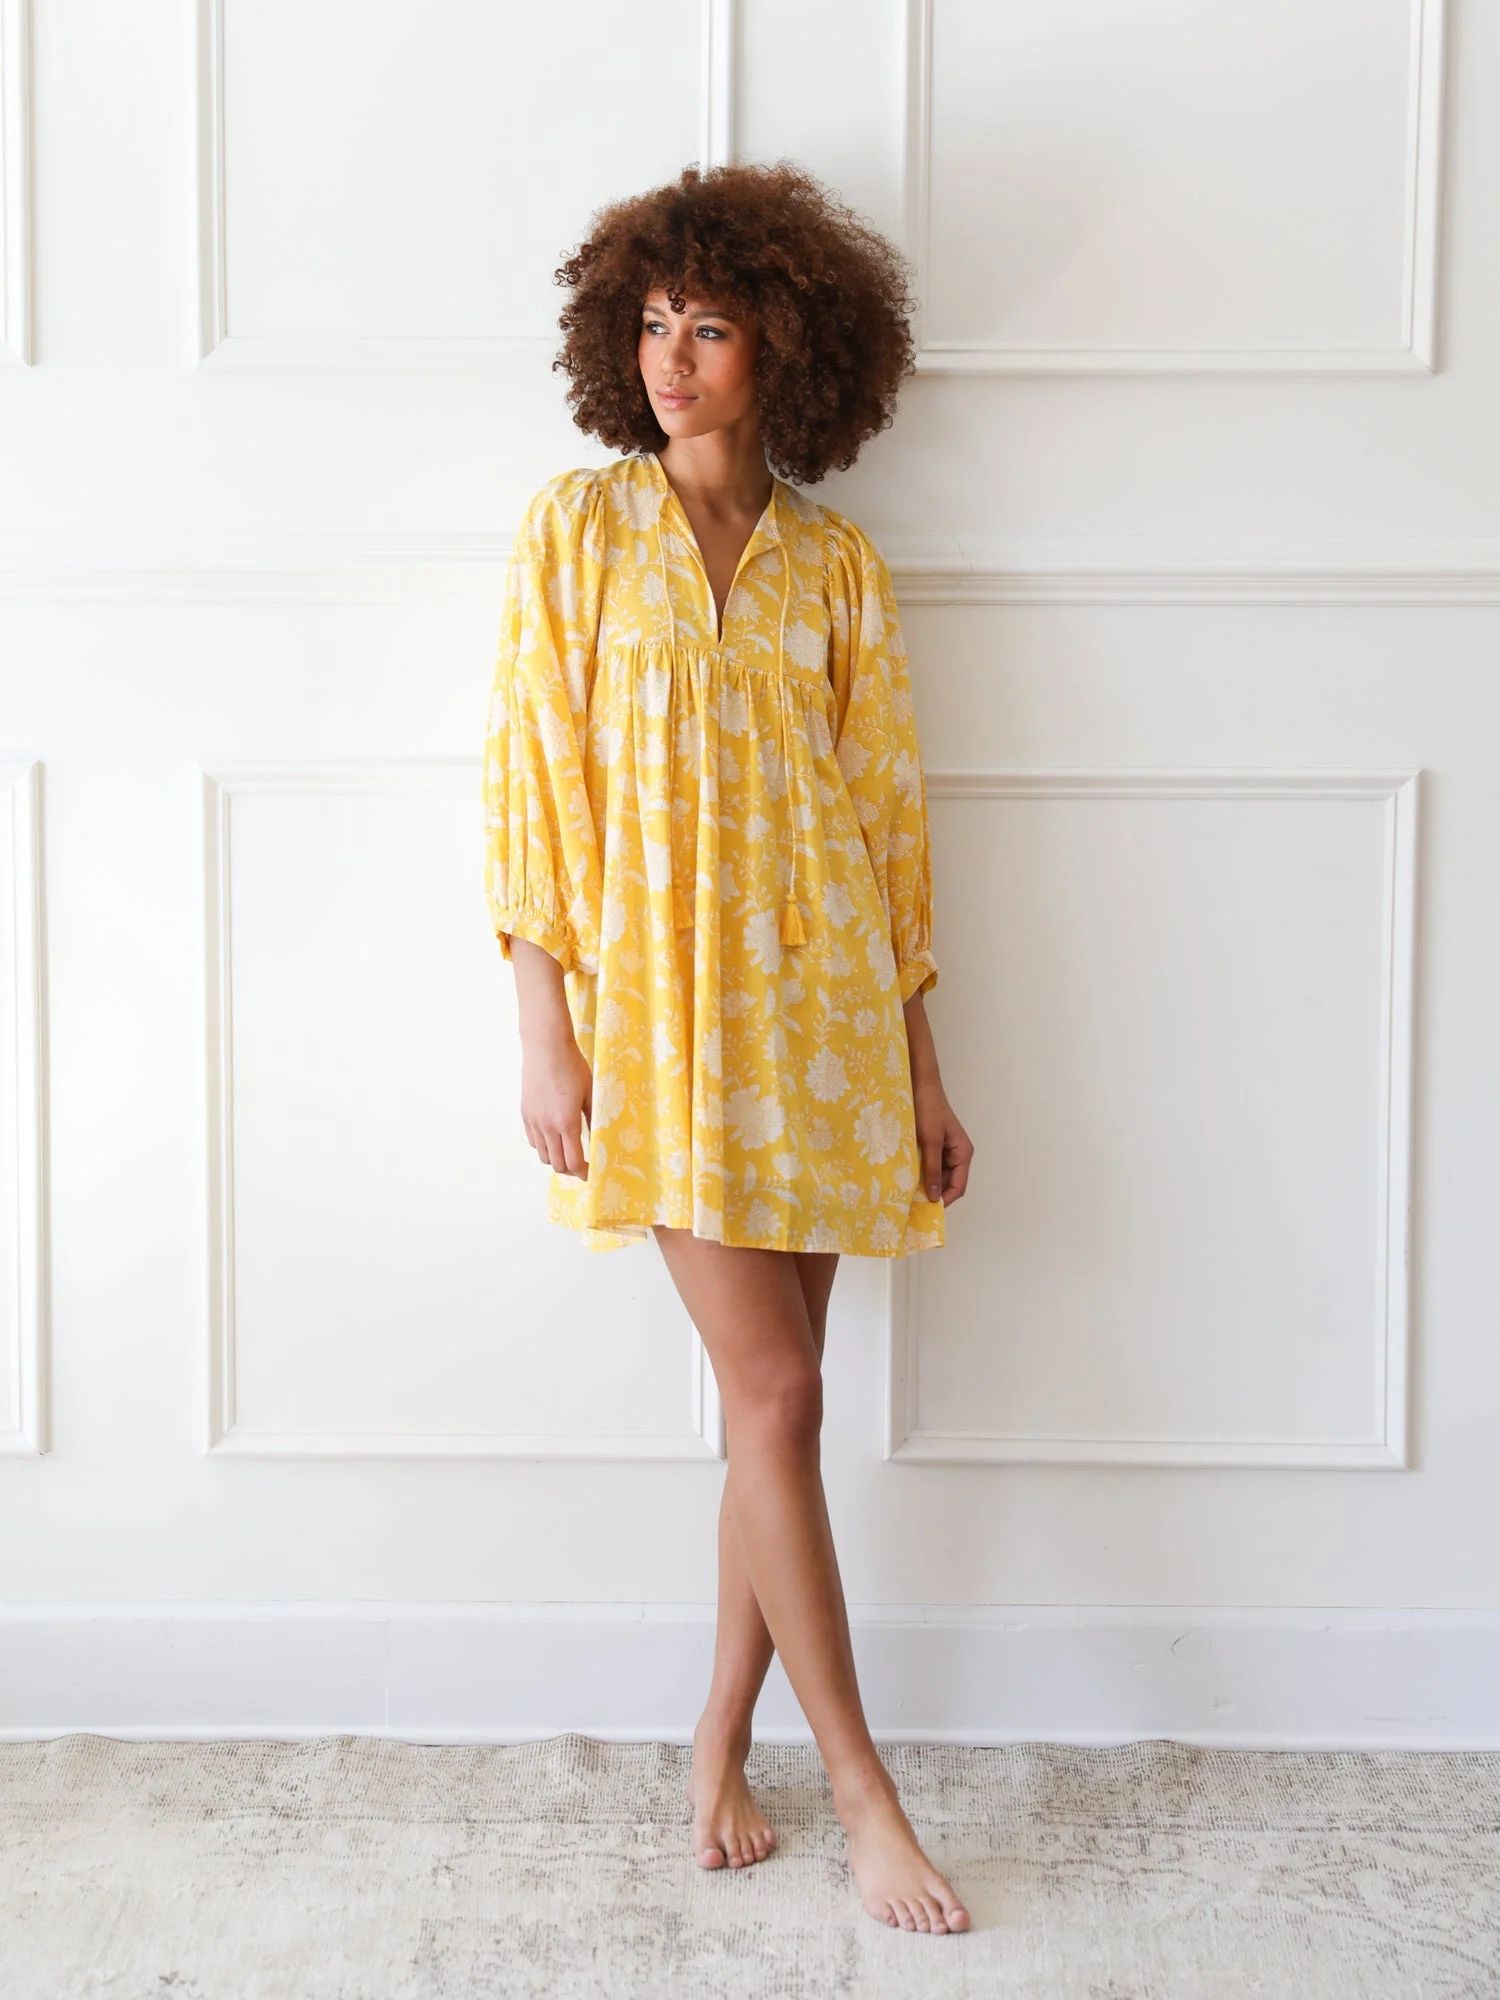 Shop Mille - Daisy Dress in Yellow Zinnia | Mille